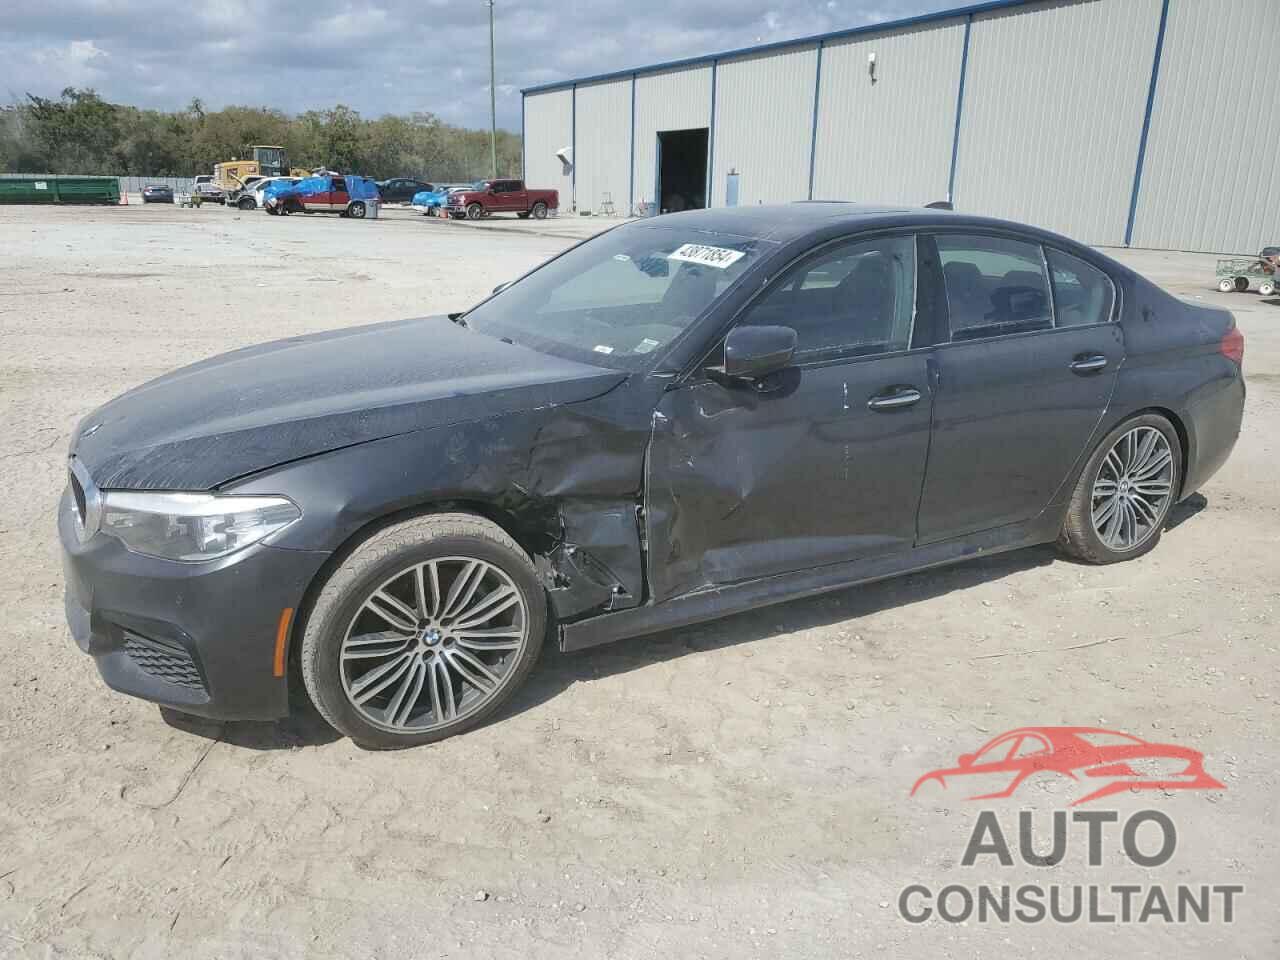 BMW 5 SERIES 2018 - WBAJE7C53JG891199